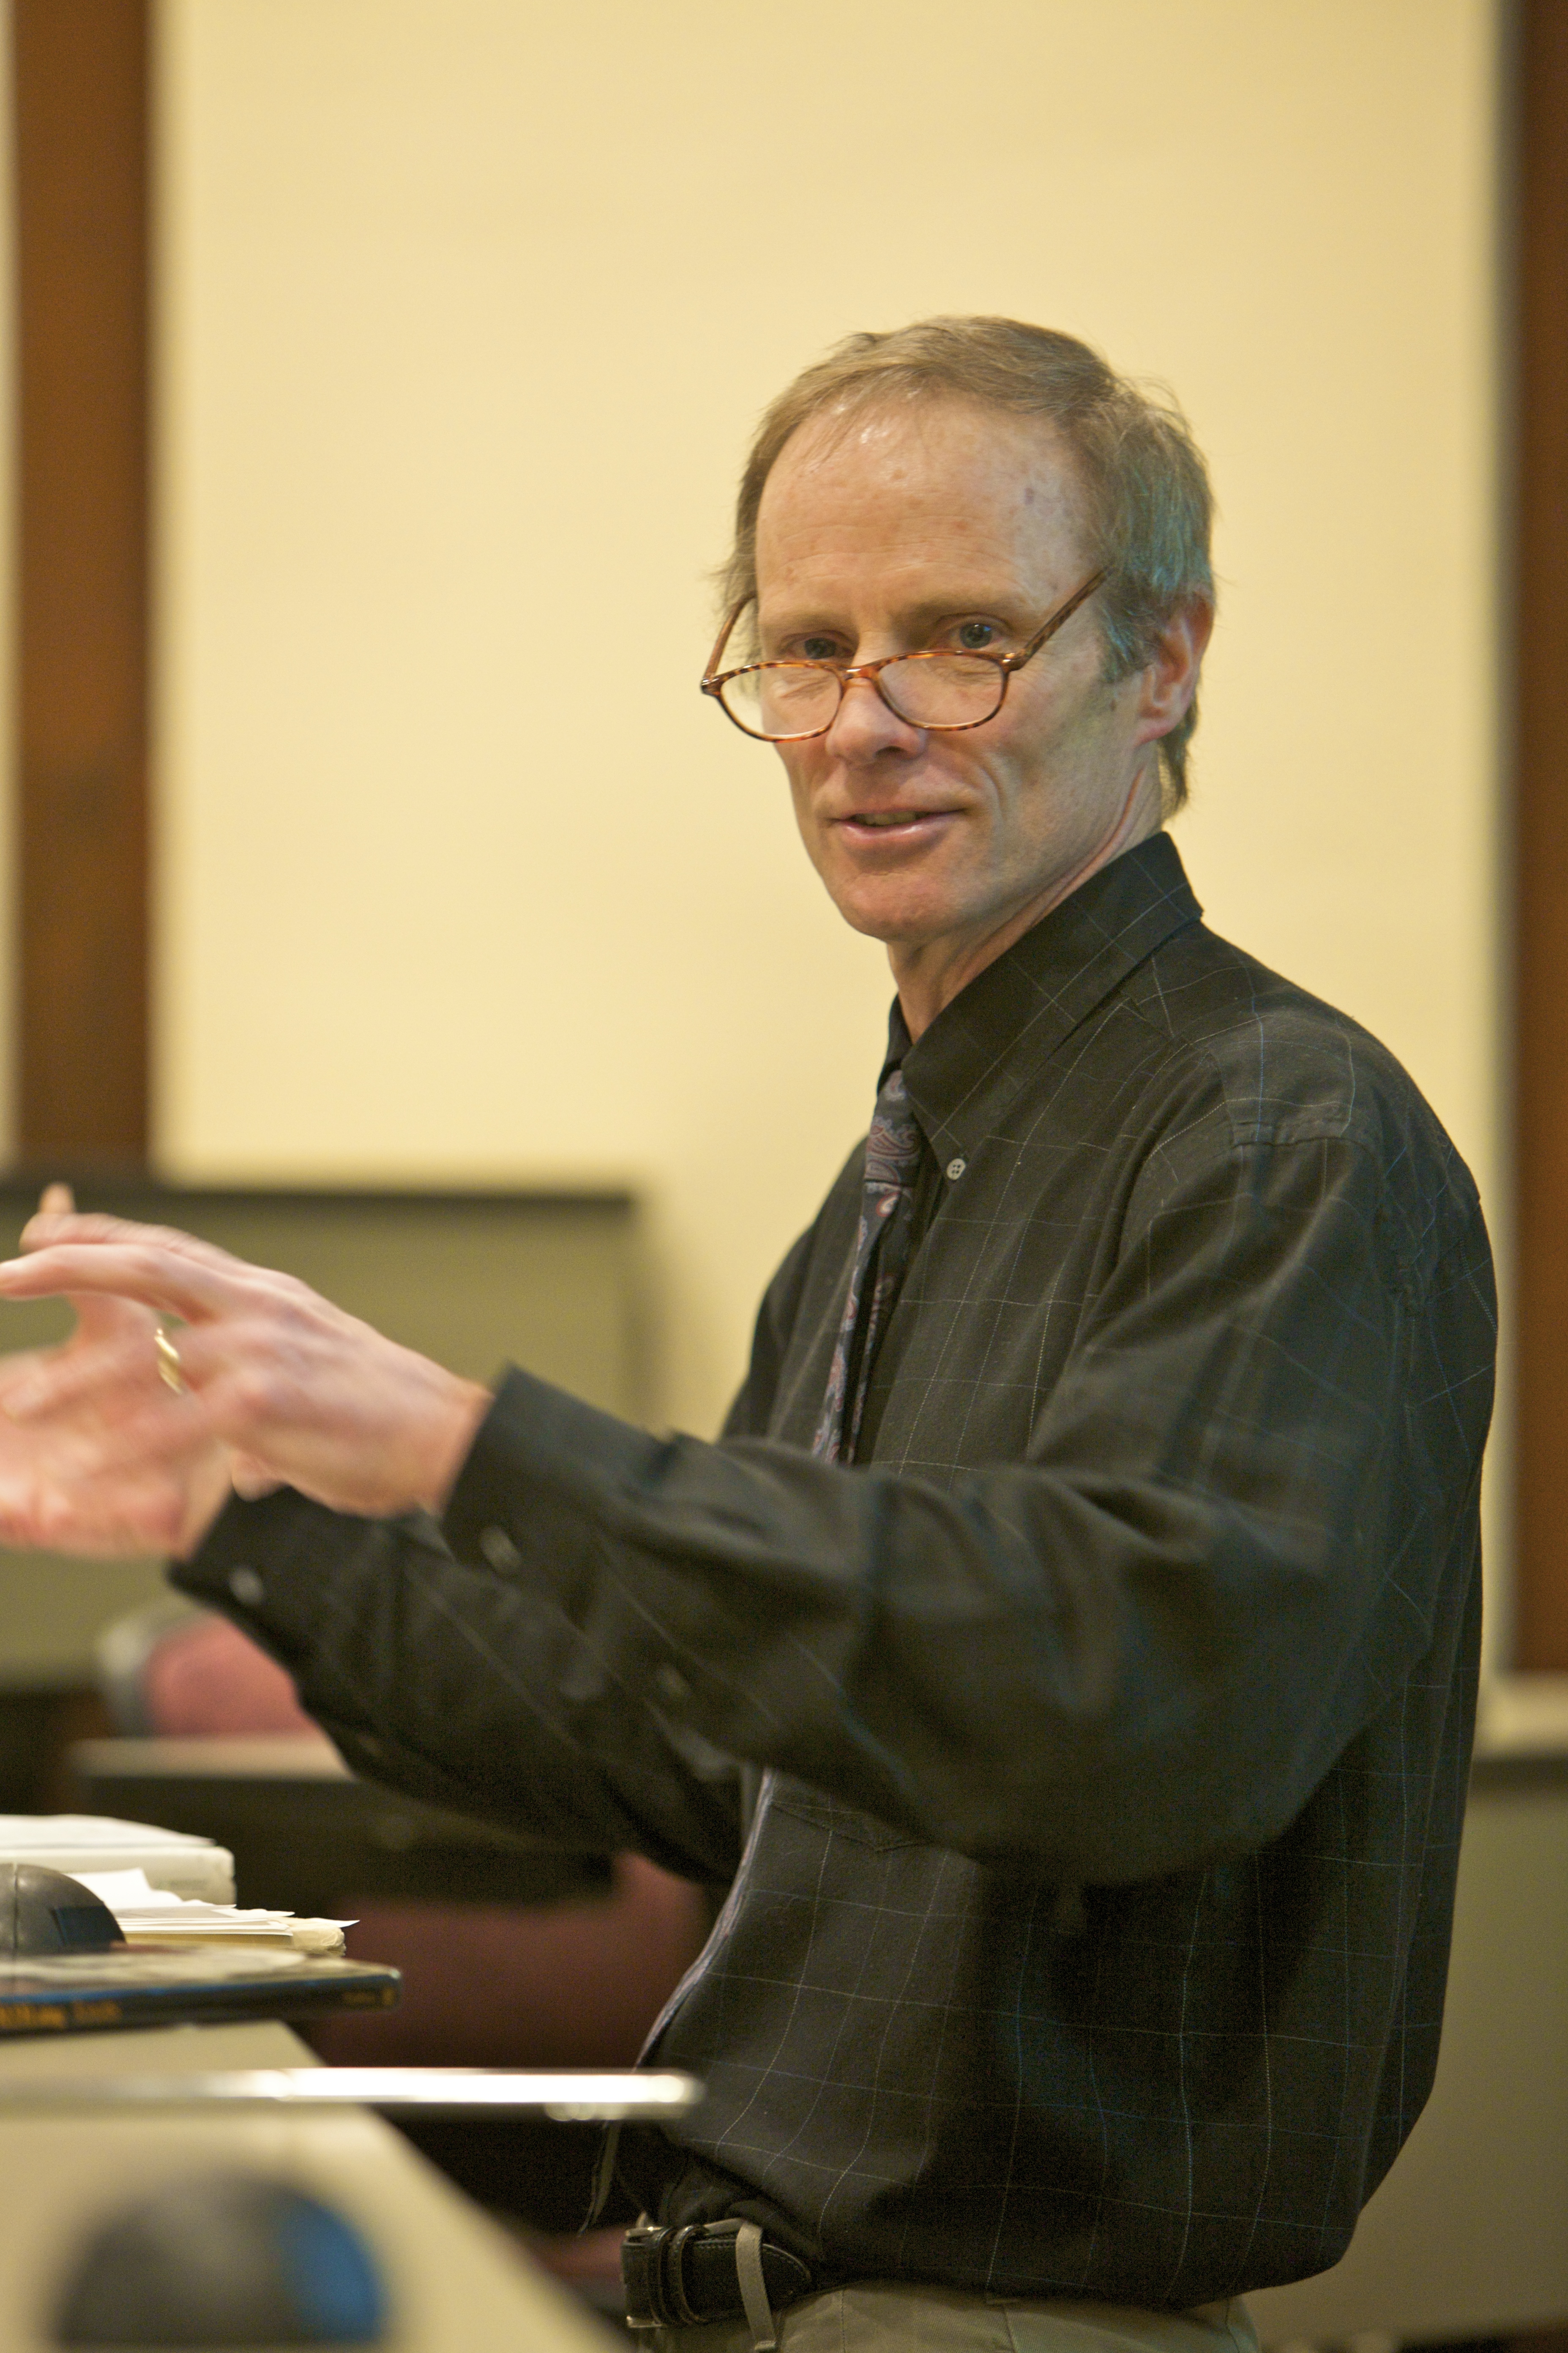 Professor Jim Baucom